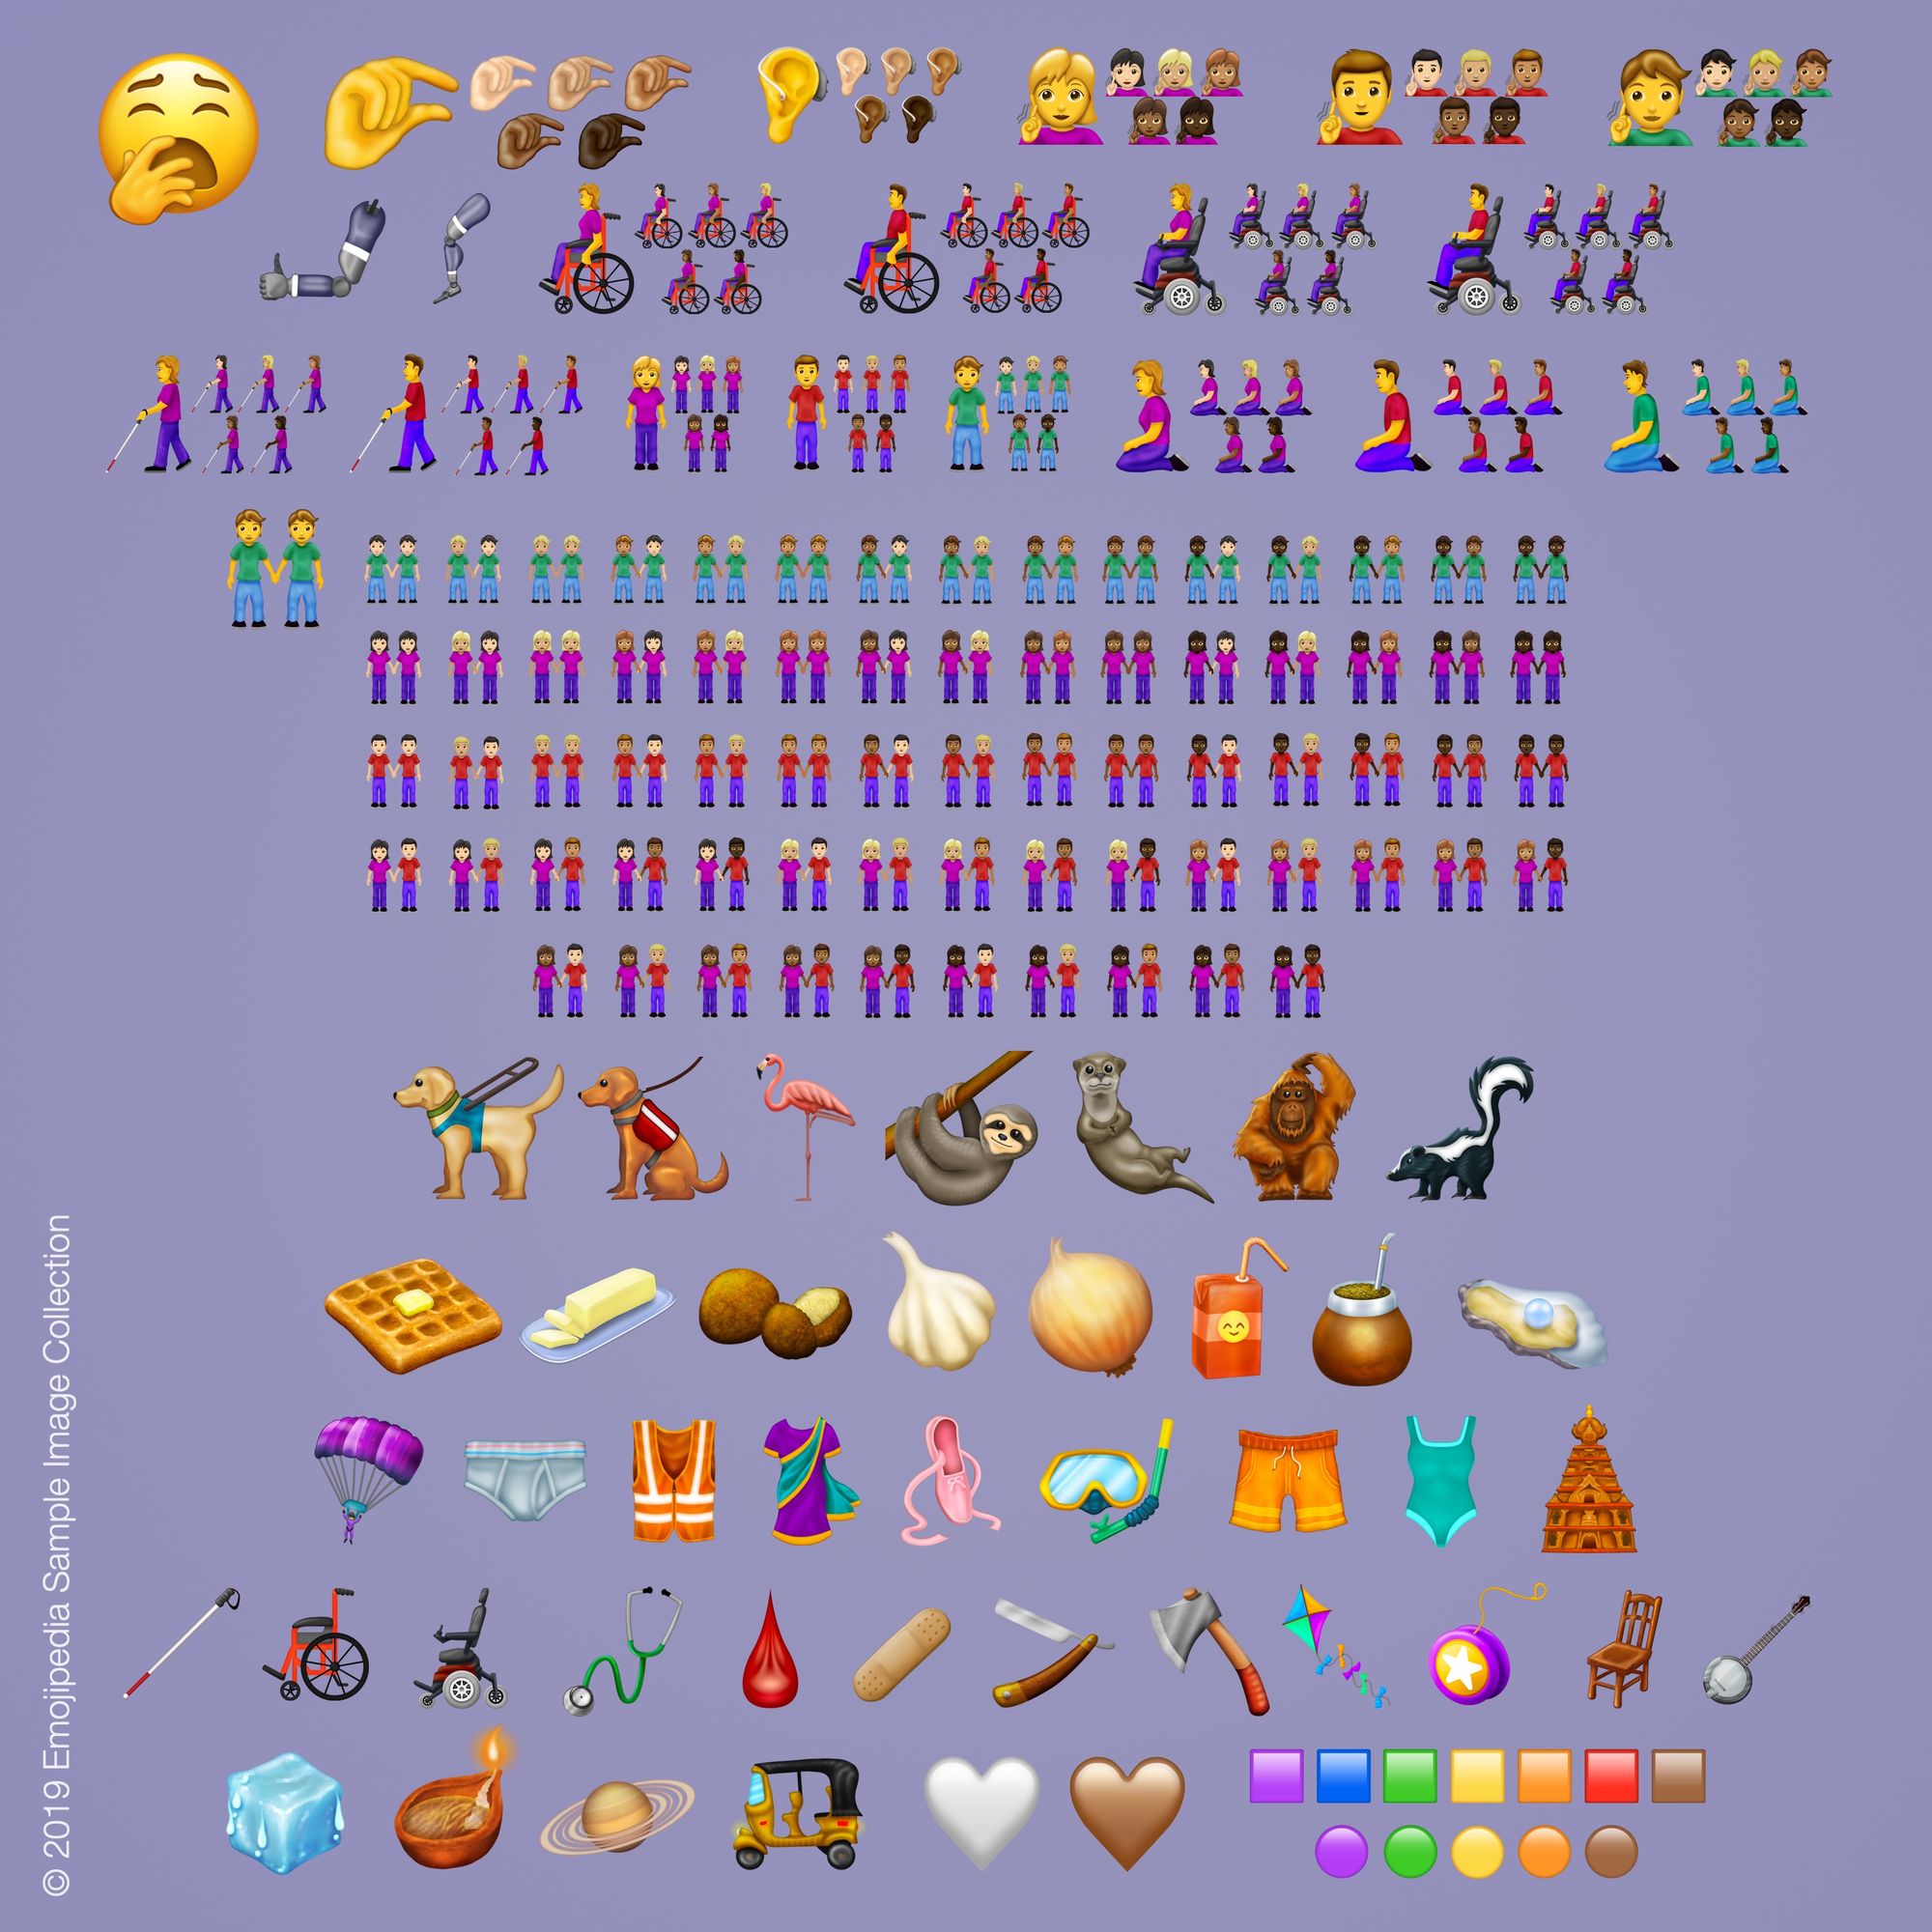 230-new-emojis-emojipedia-sample-images-2019-emoji-12